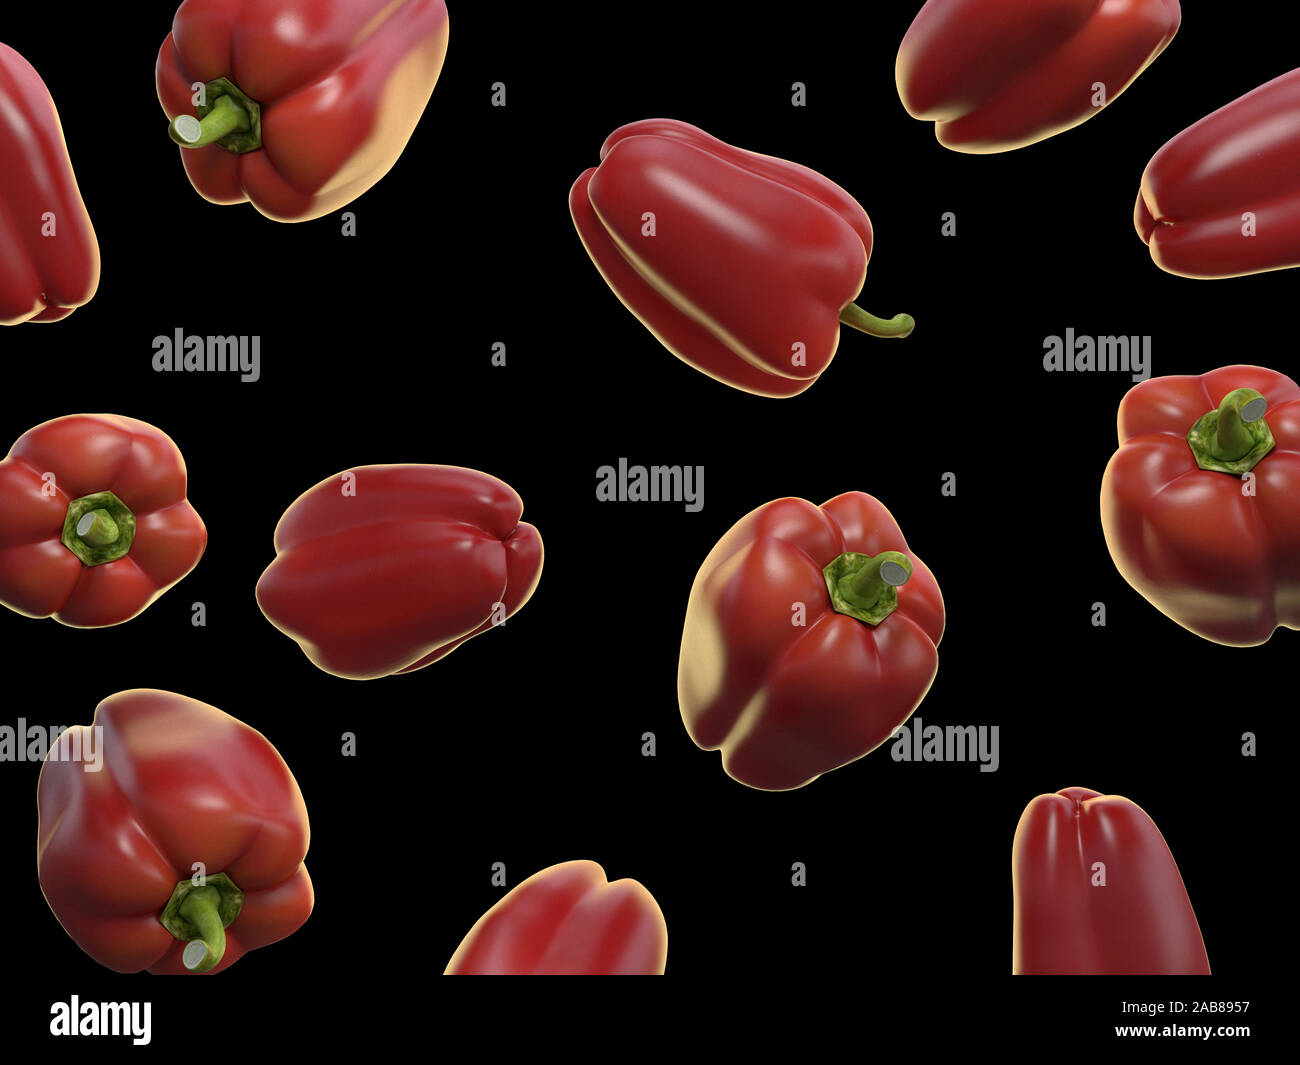 La nourriture en rendu 3d illustration de bell peppers Banque D'Images